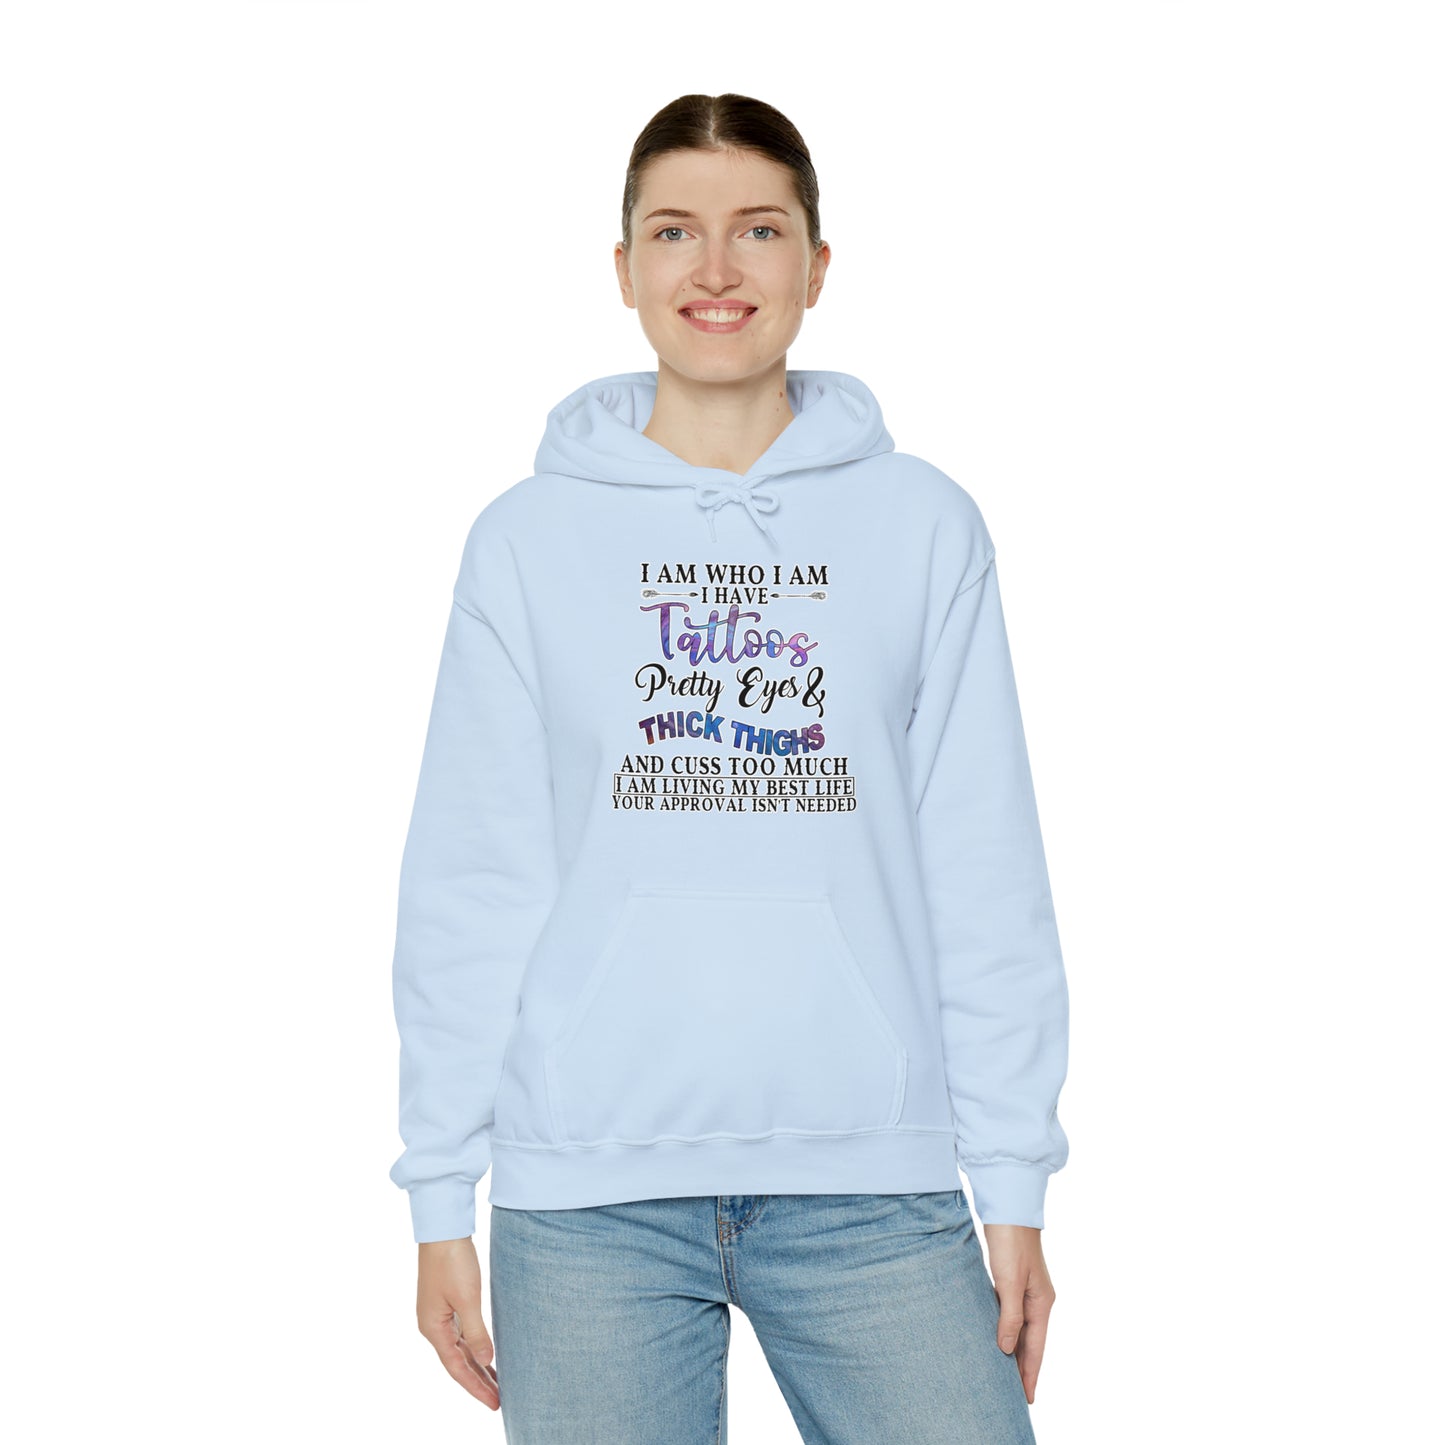 I Am Who I Am, Tattoos, Pretty Eyes, Thick Thighs: Unisex Heavy Blend™ Hooded Sweatshirt